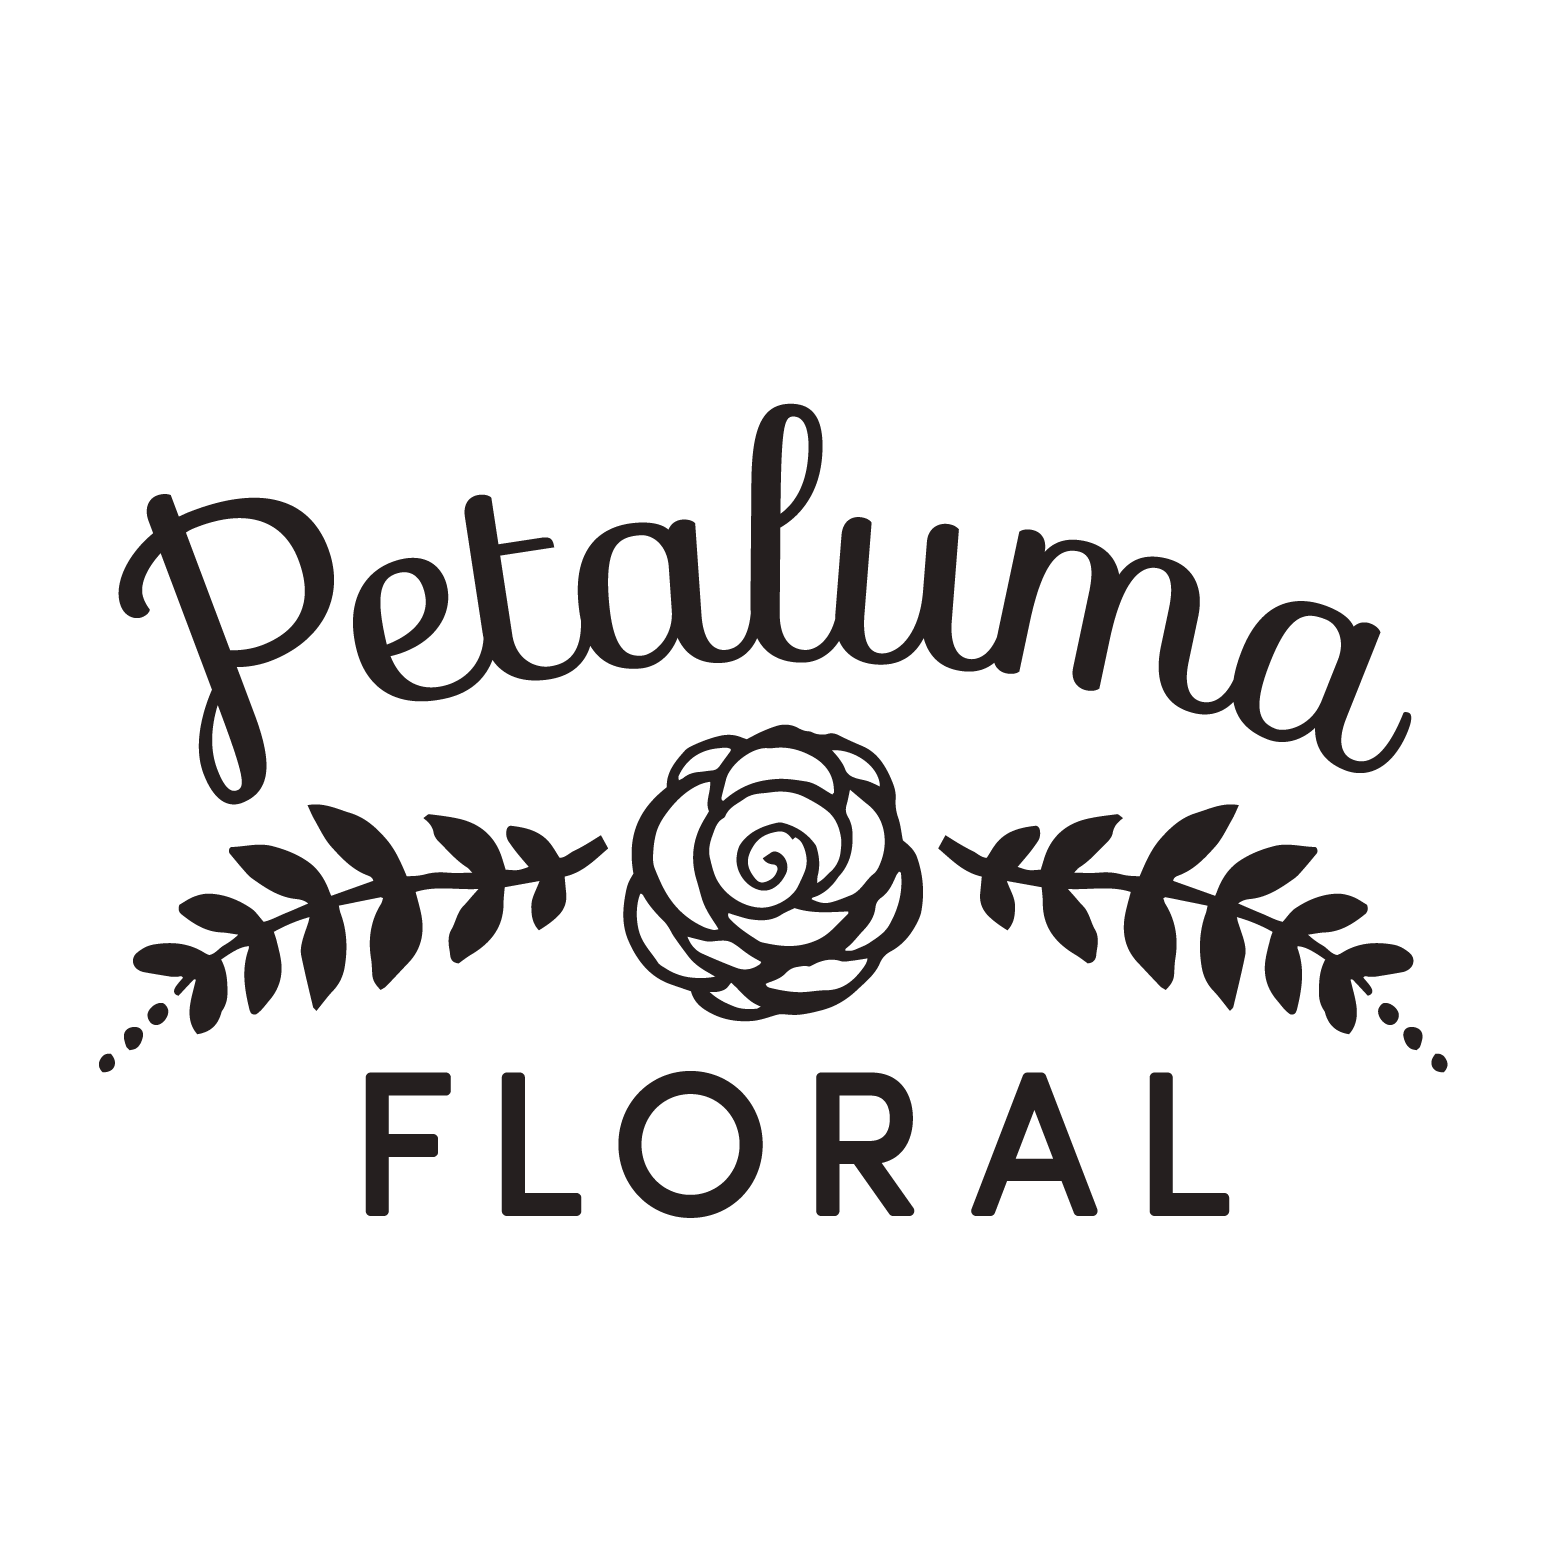 Petaluma Floral